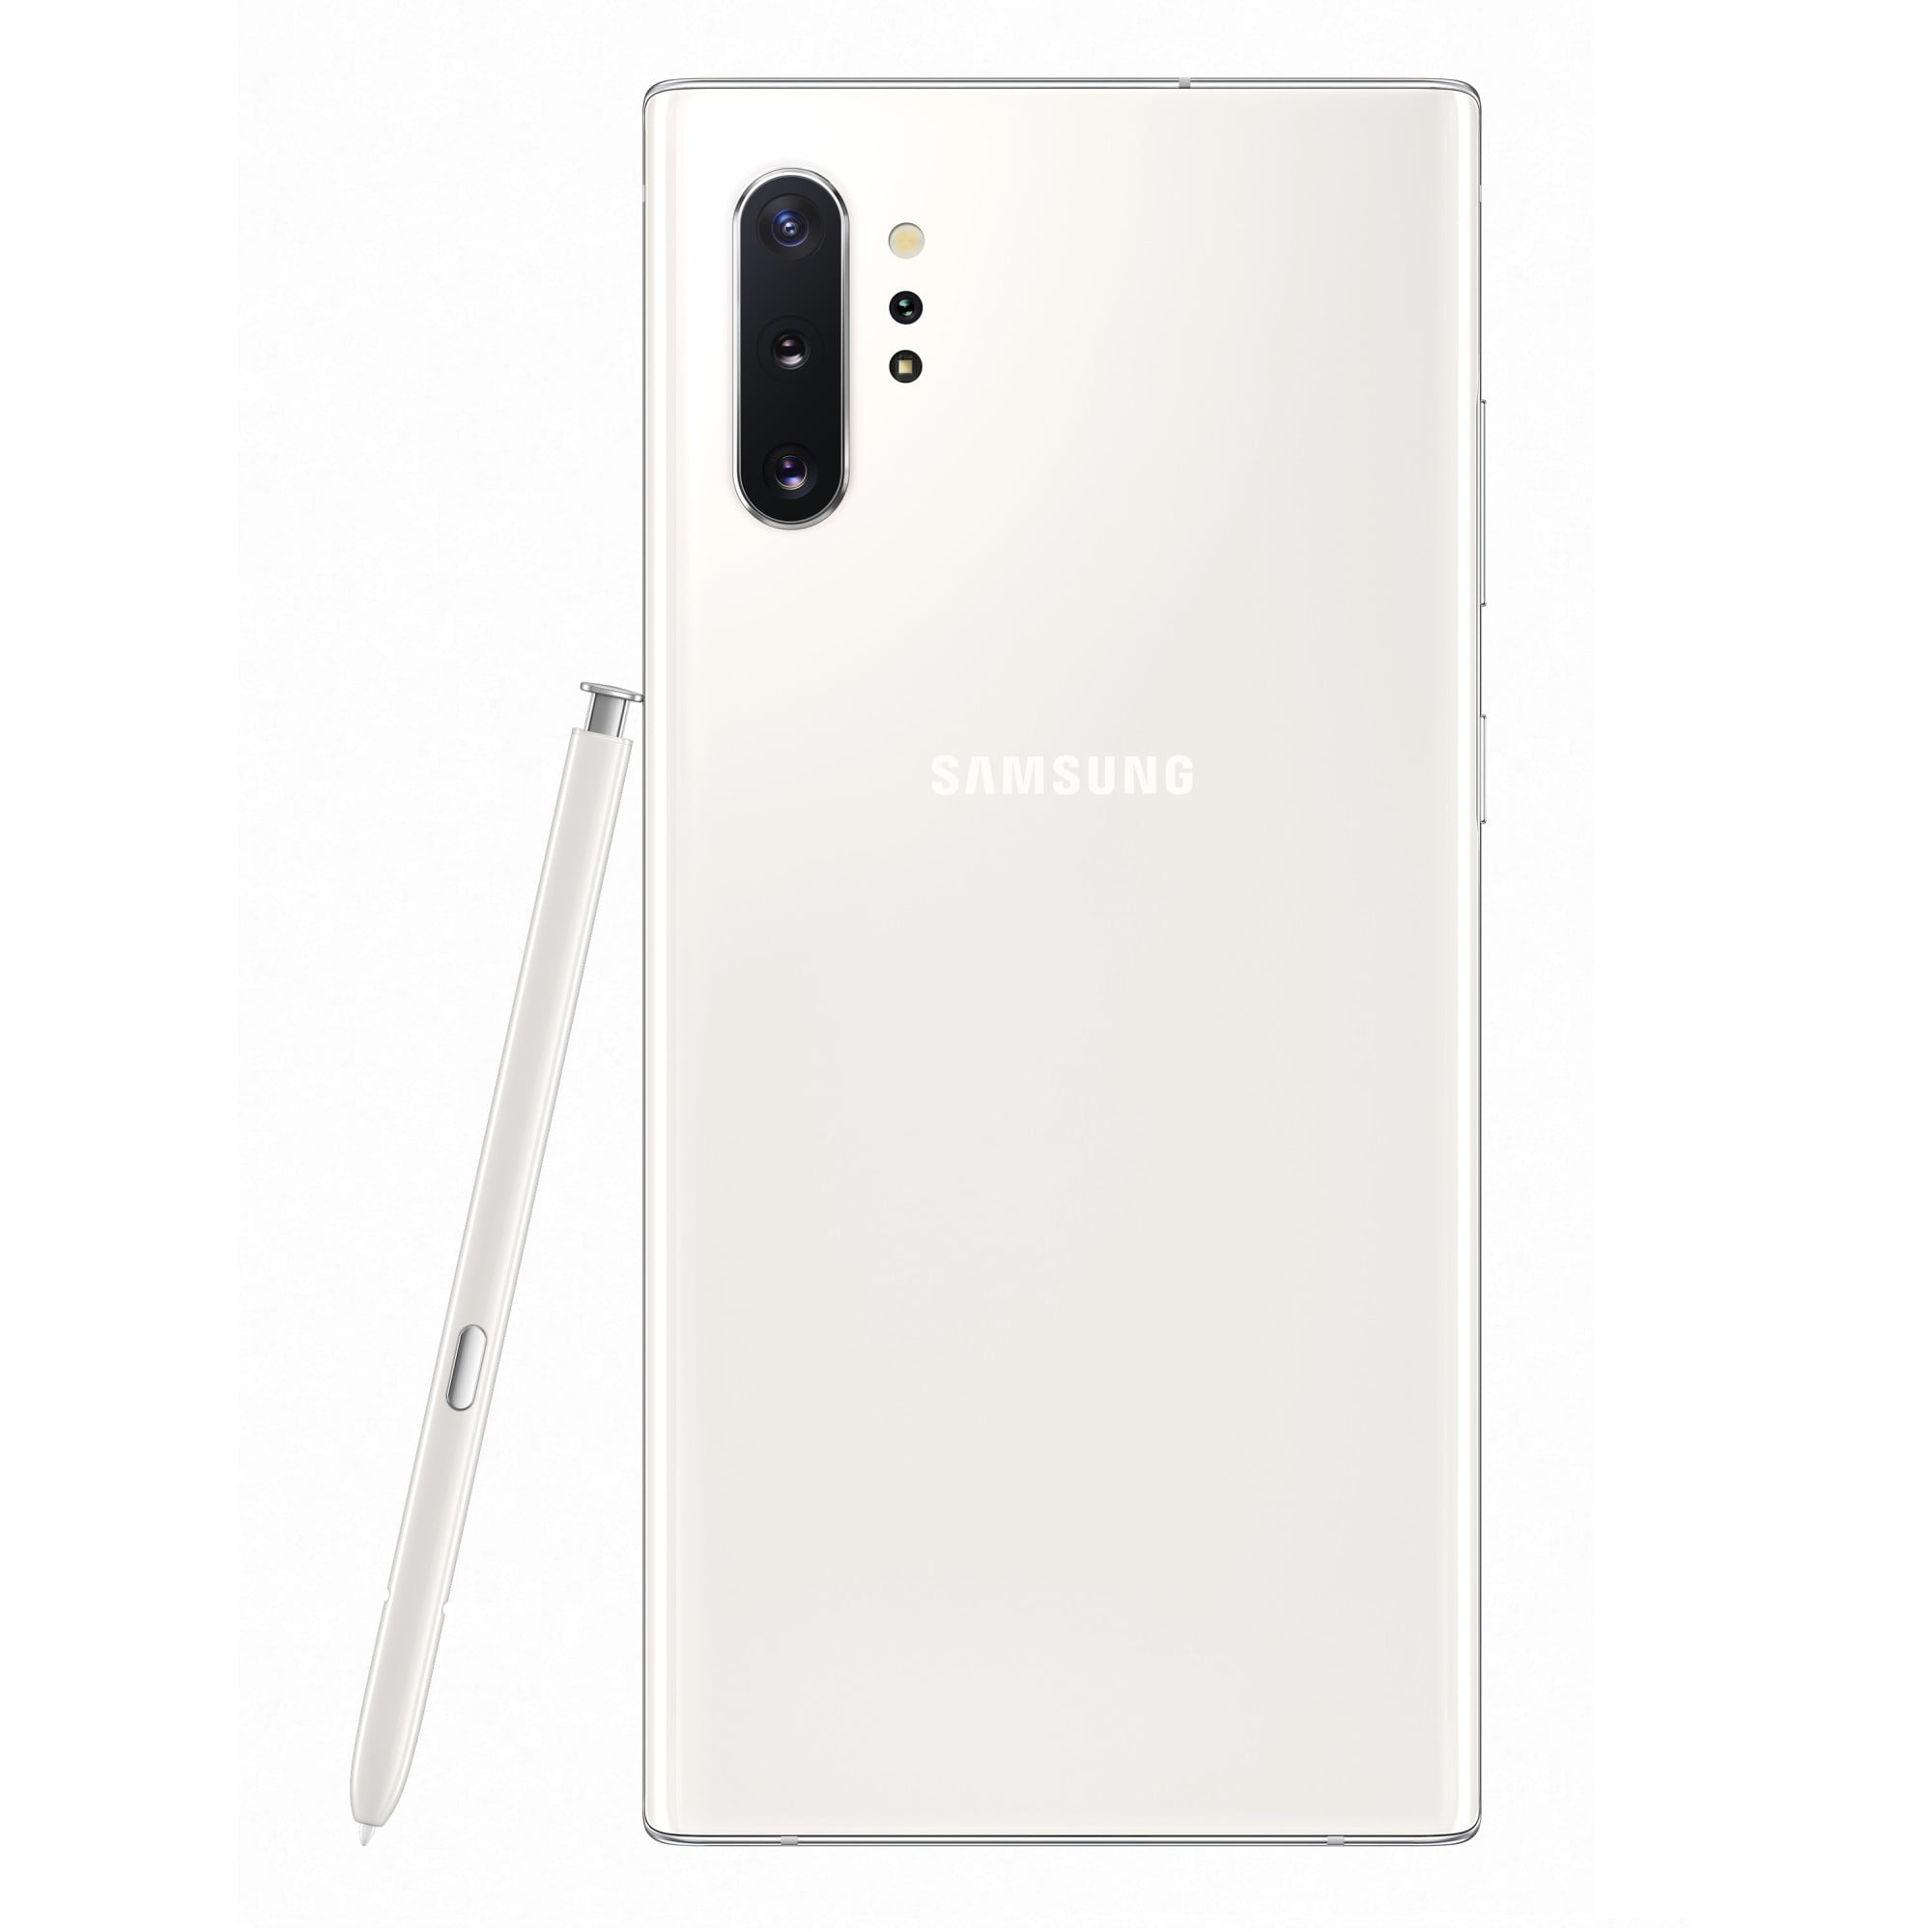  Samsung Galaxy Note 10 Plus (SM-N975F) Single SIM, 256GB, 6.8,  12GB RAM, GSM, Factory Unlocked LTE Smartphone, International Version -  Aura Black : Cell Phones & Accessories